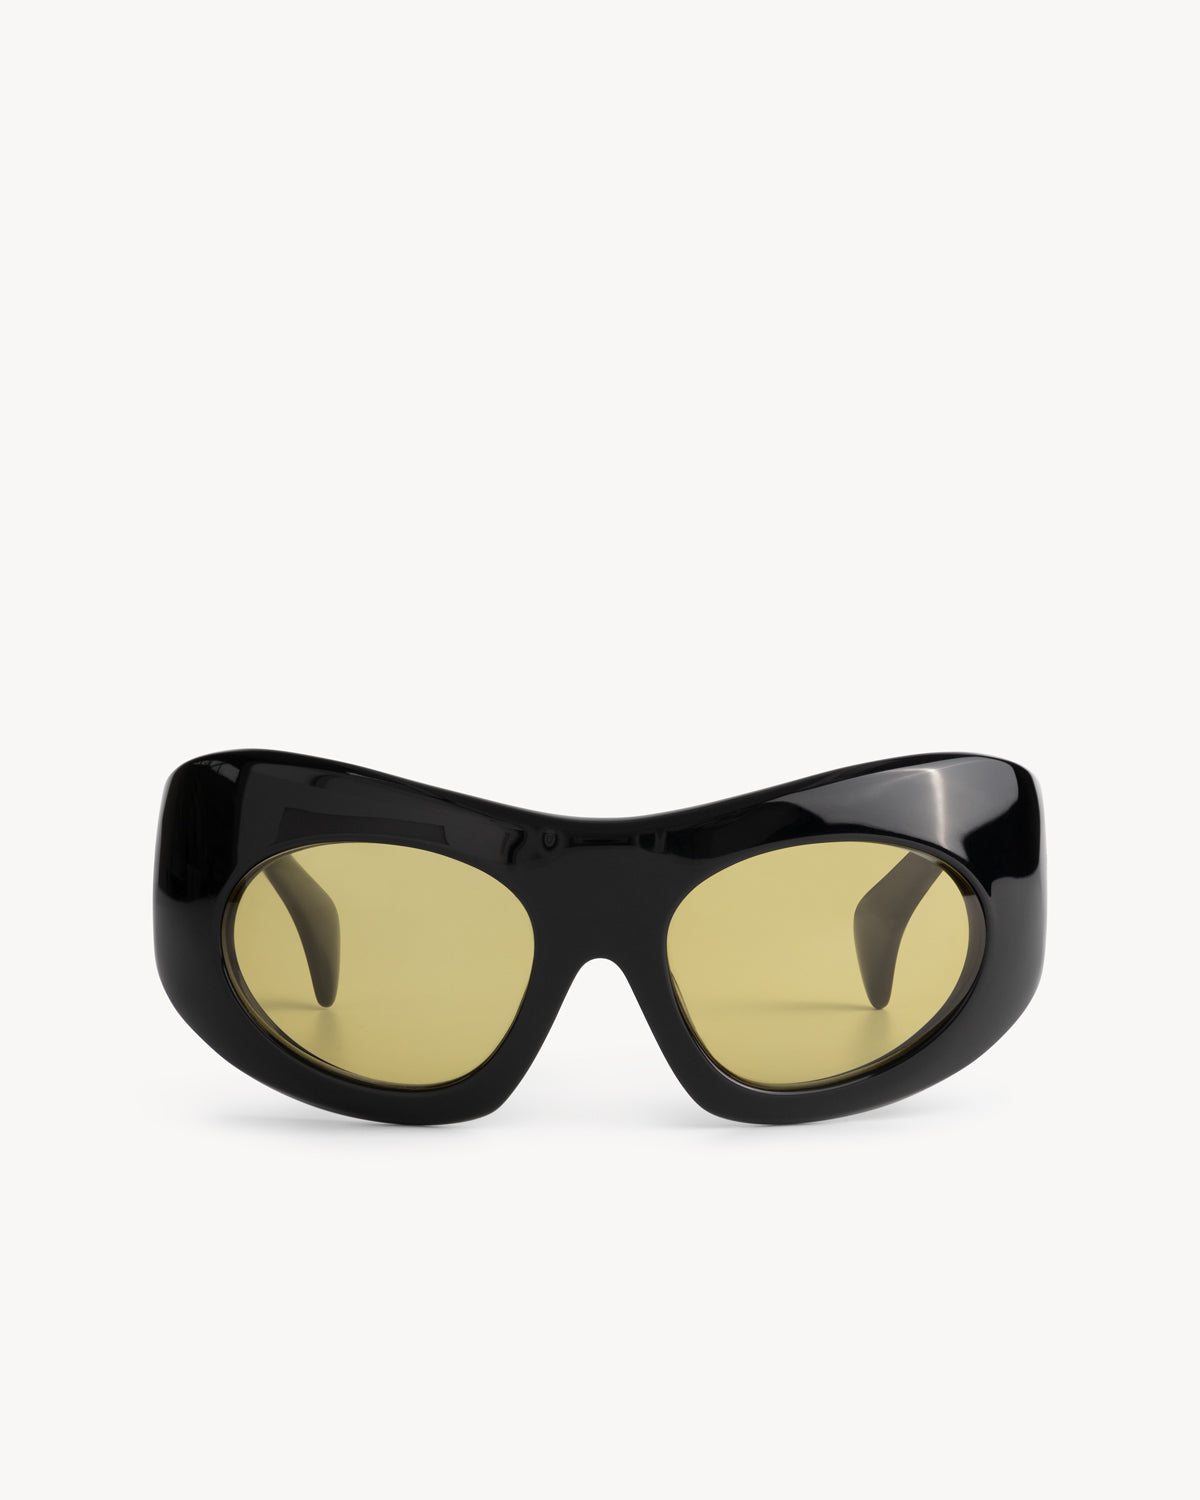 Port Tanger Ruh Sunglasses in Black acetate and Warm Olive Lenses 1